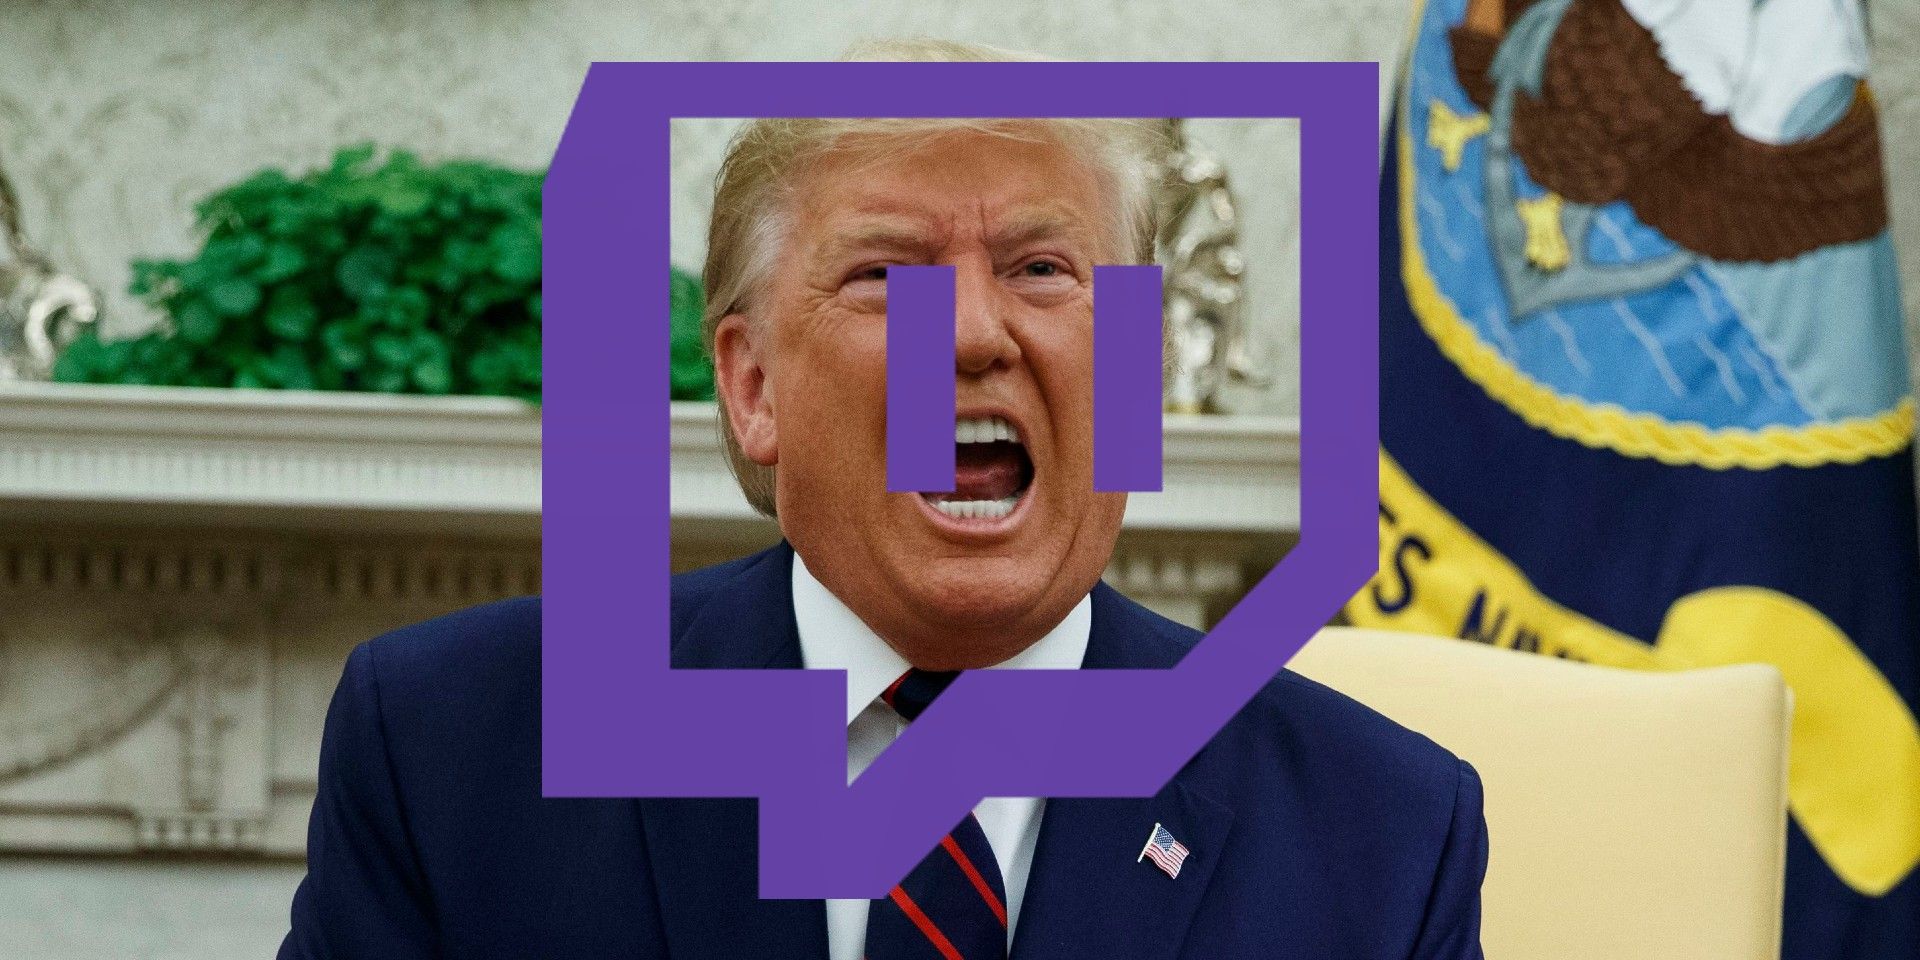 Twitch logo over Donald Trump